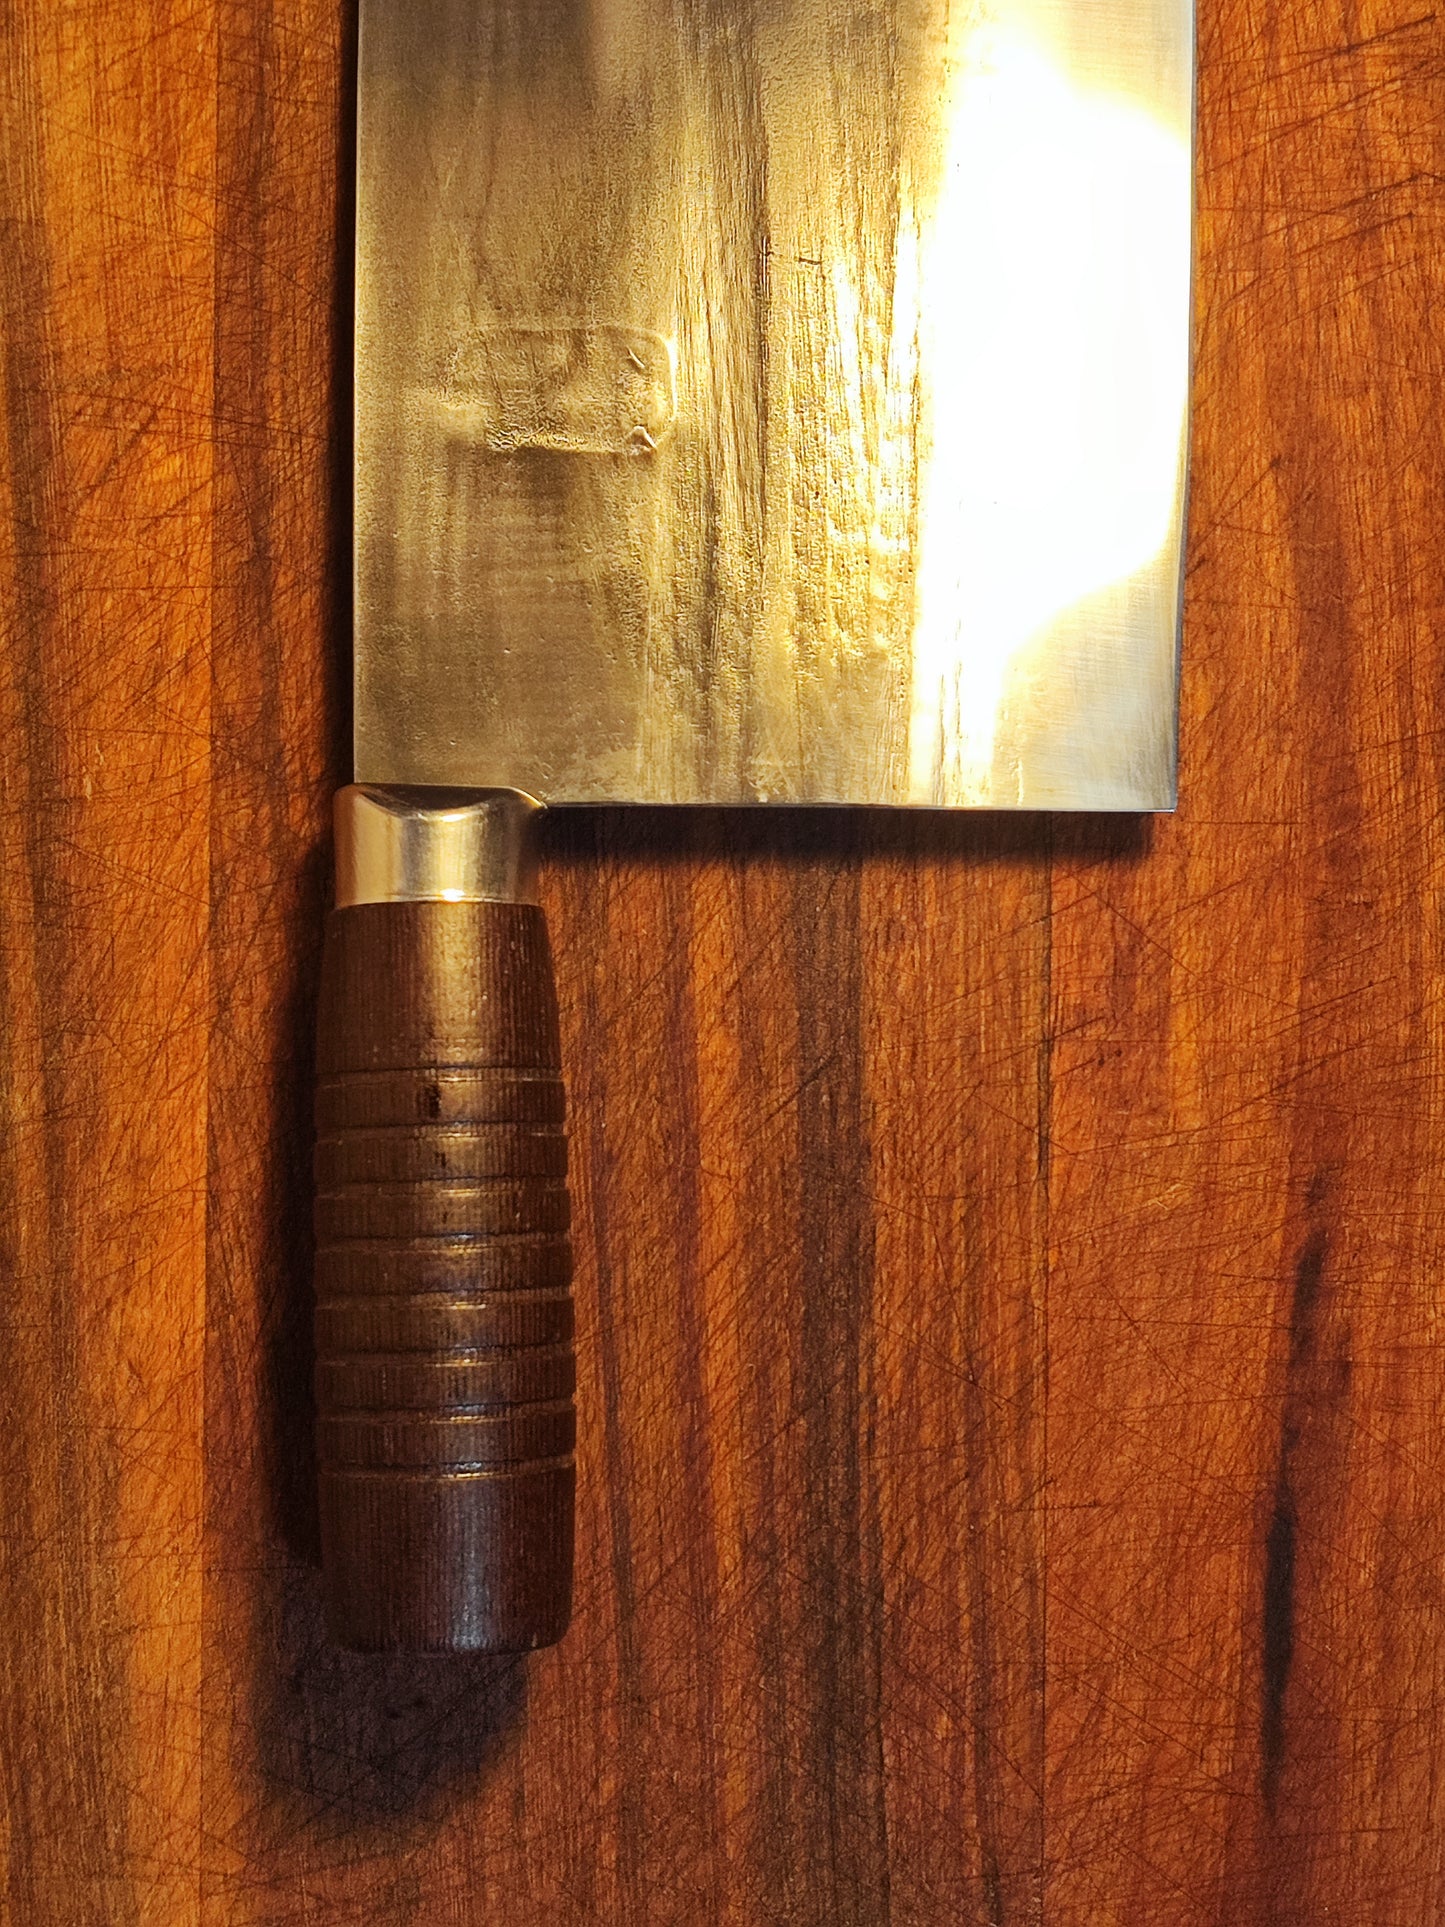 33号折影切片刀
Chinese kitchen knives(中式刀)